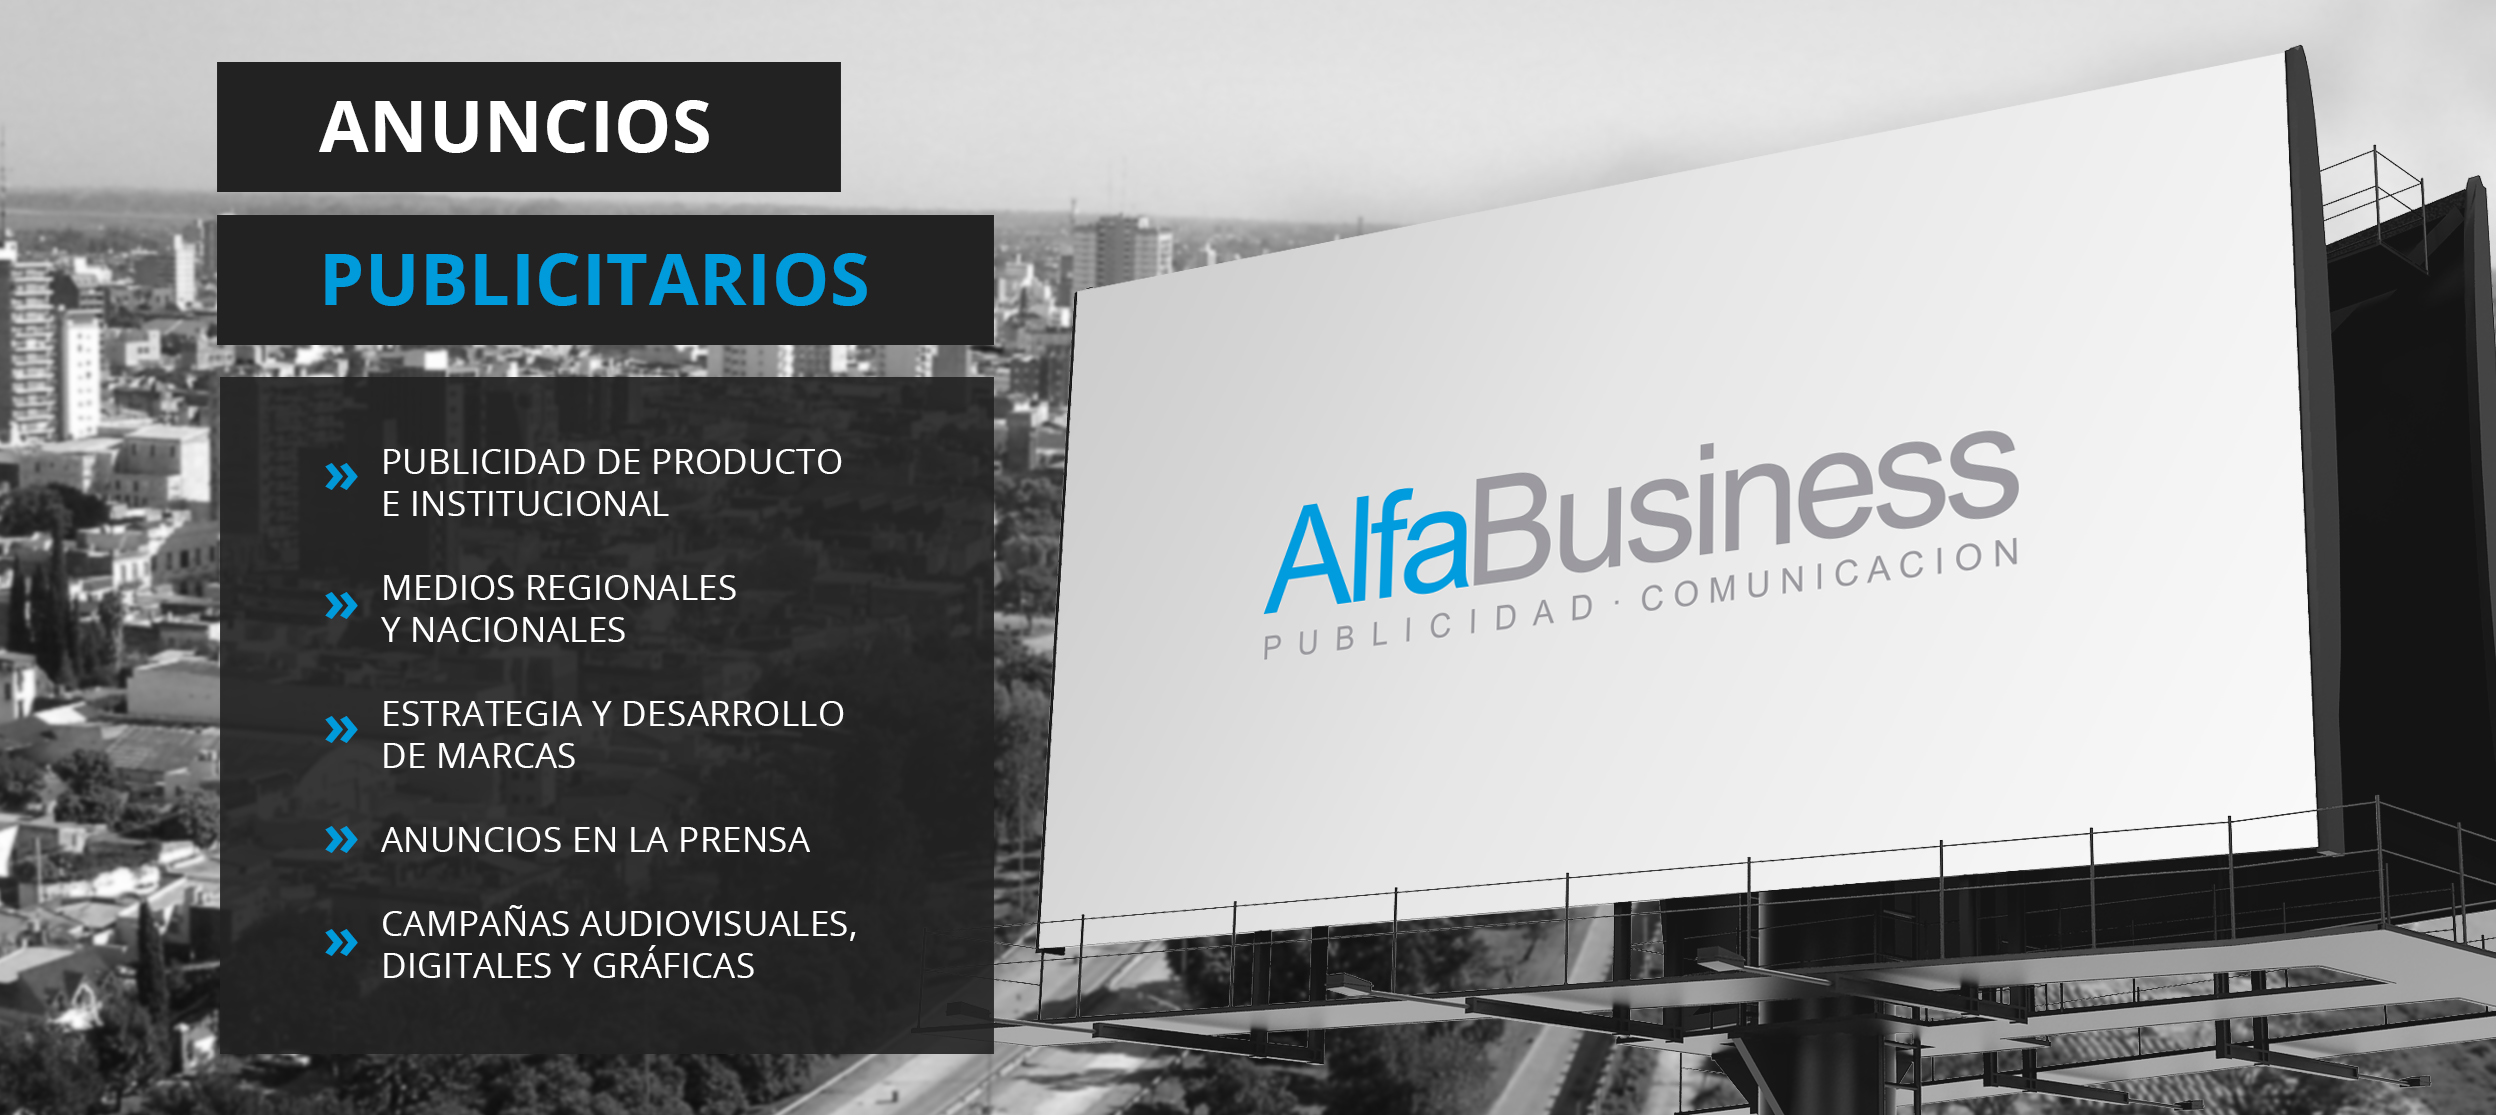 Alfa Business anuncios publicitarios